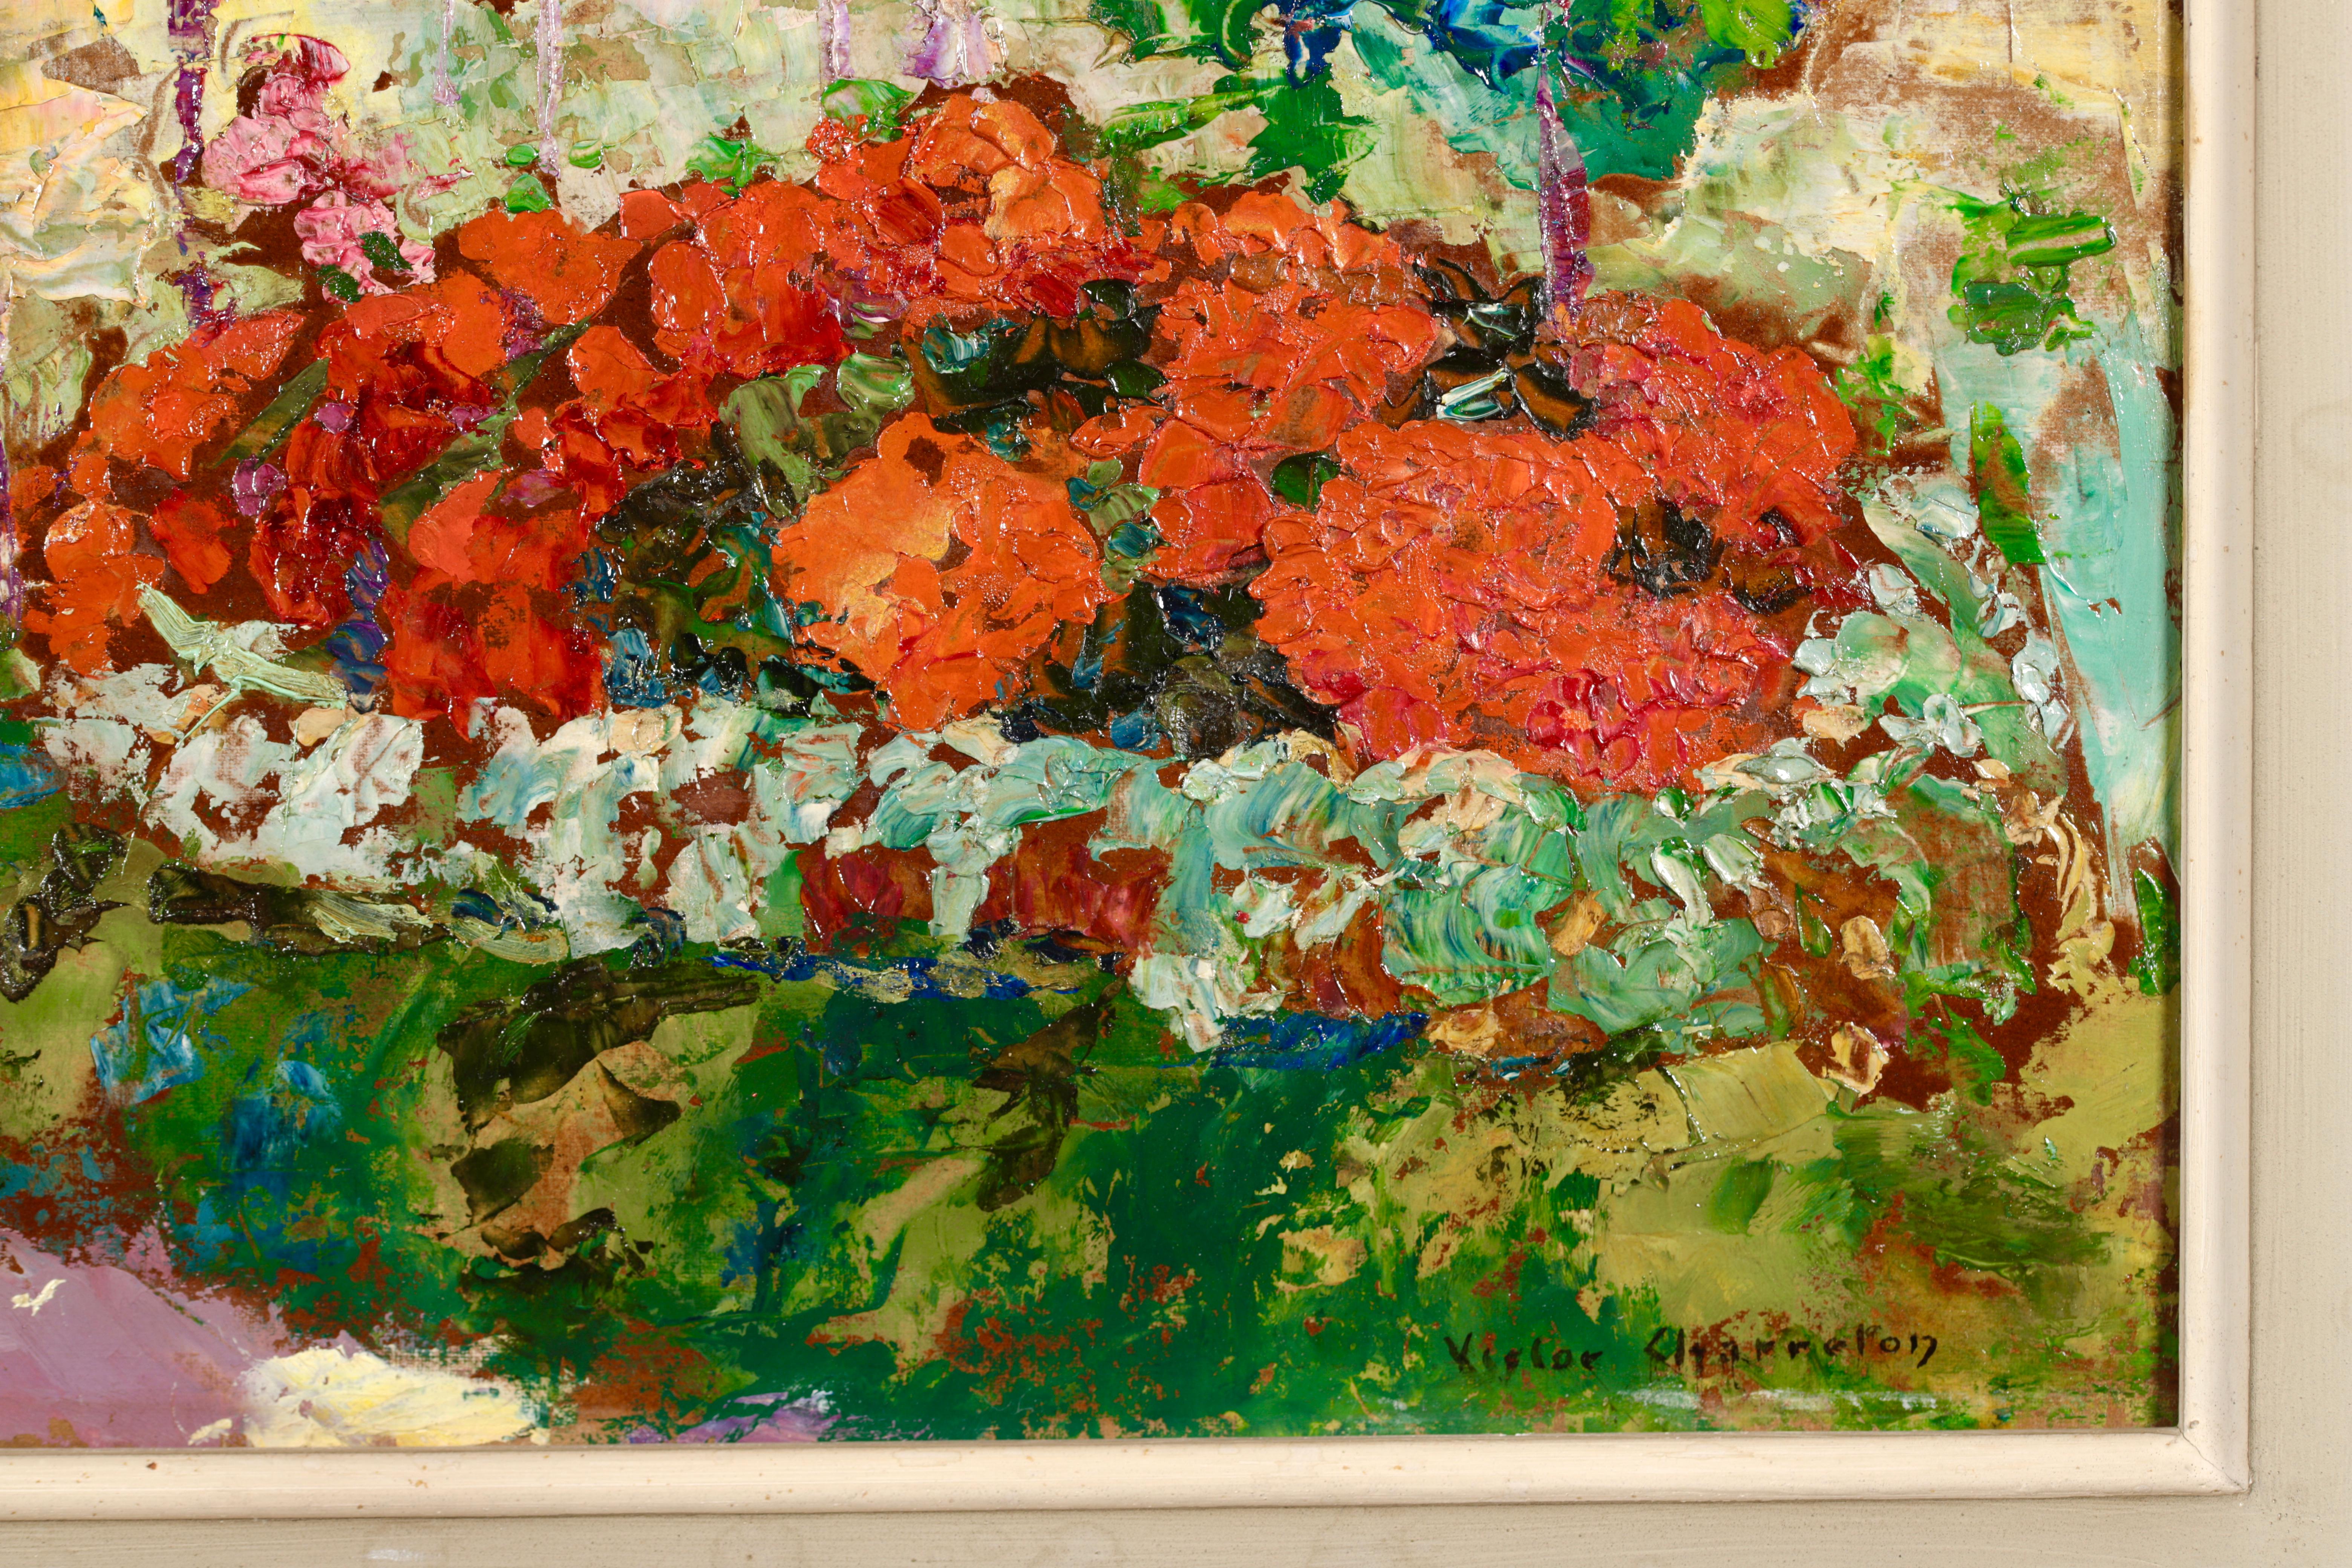 Flower Garden - Post-Impressionist Oil, Summer Landscape by Victor Charreton 6